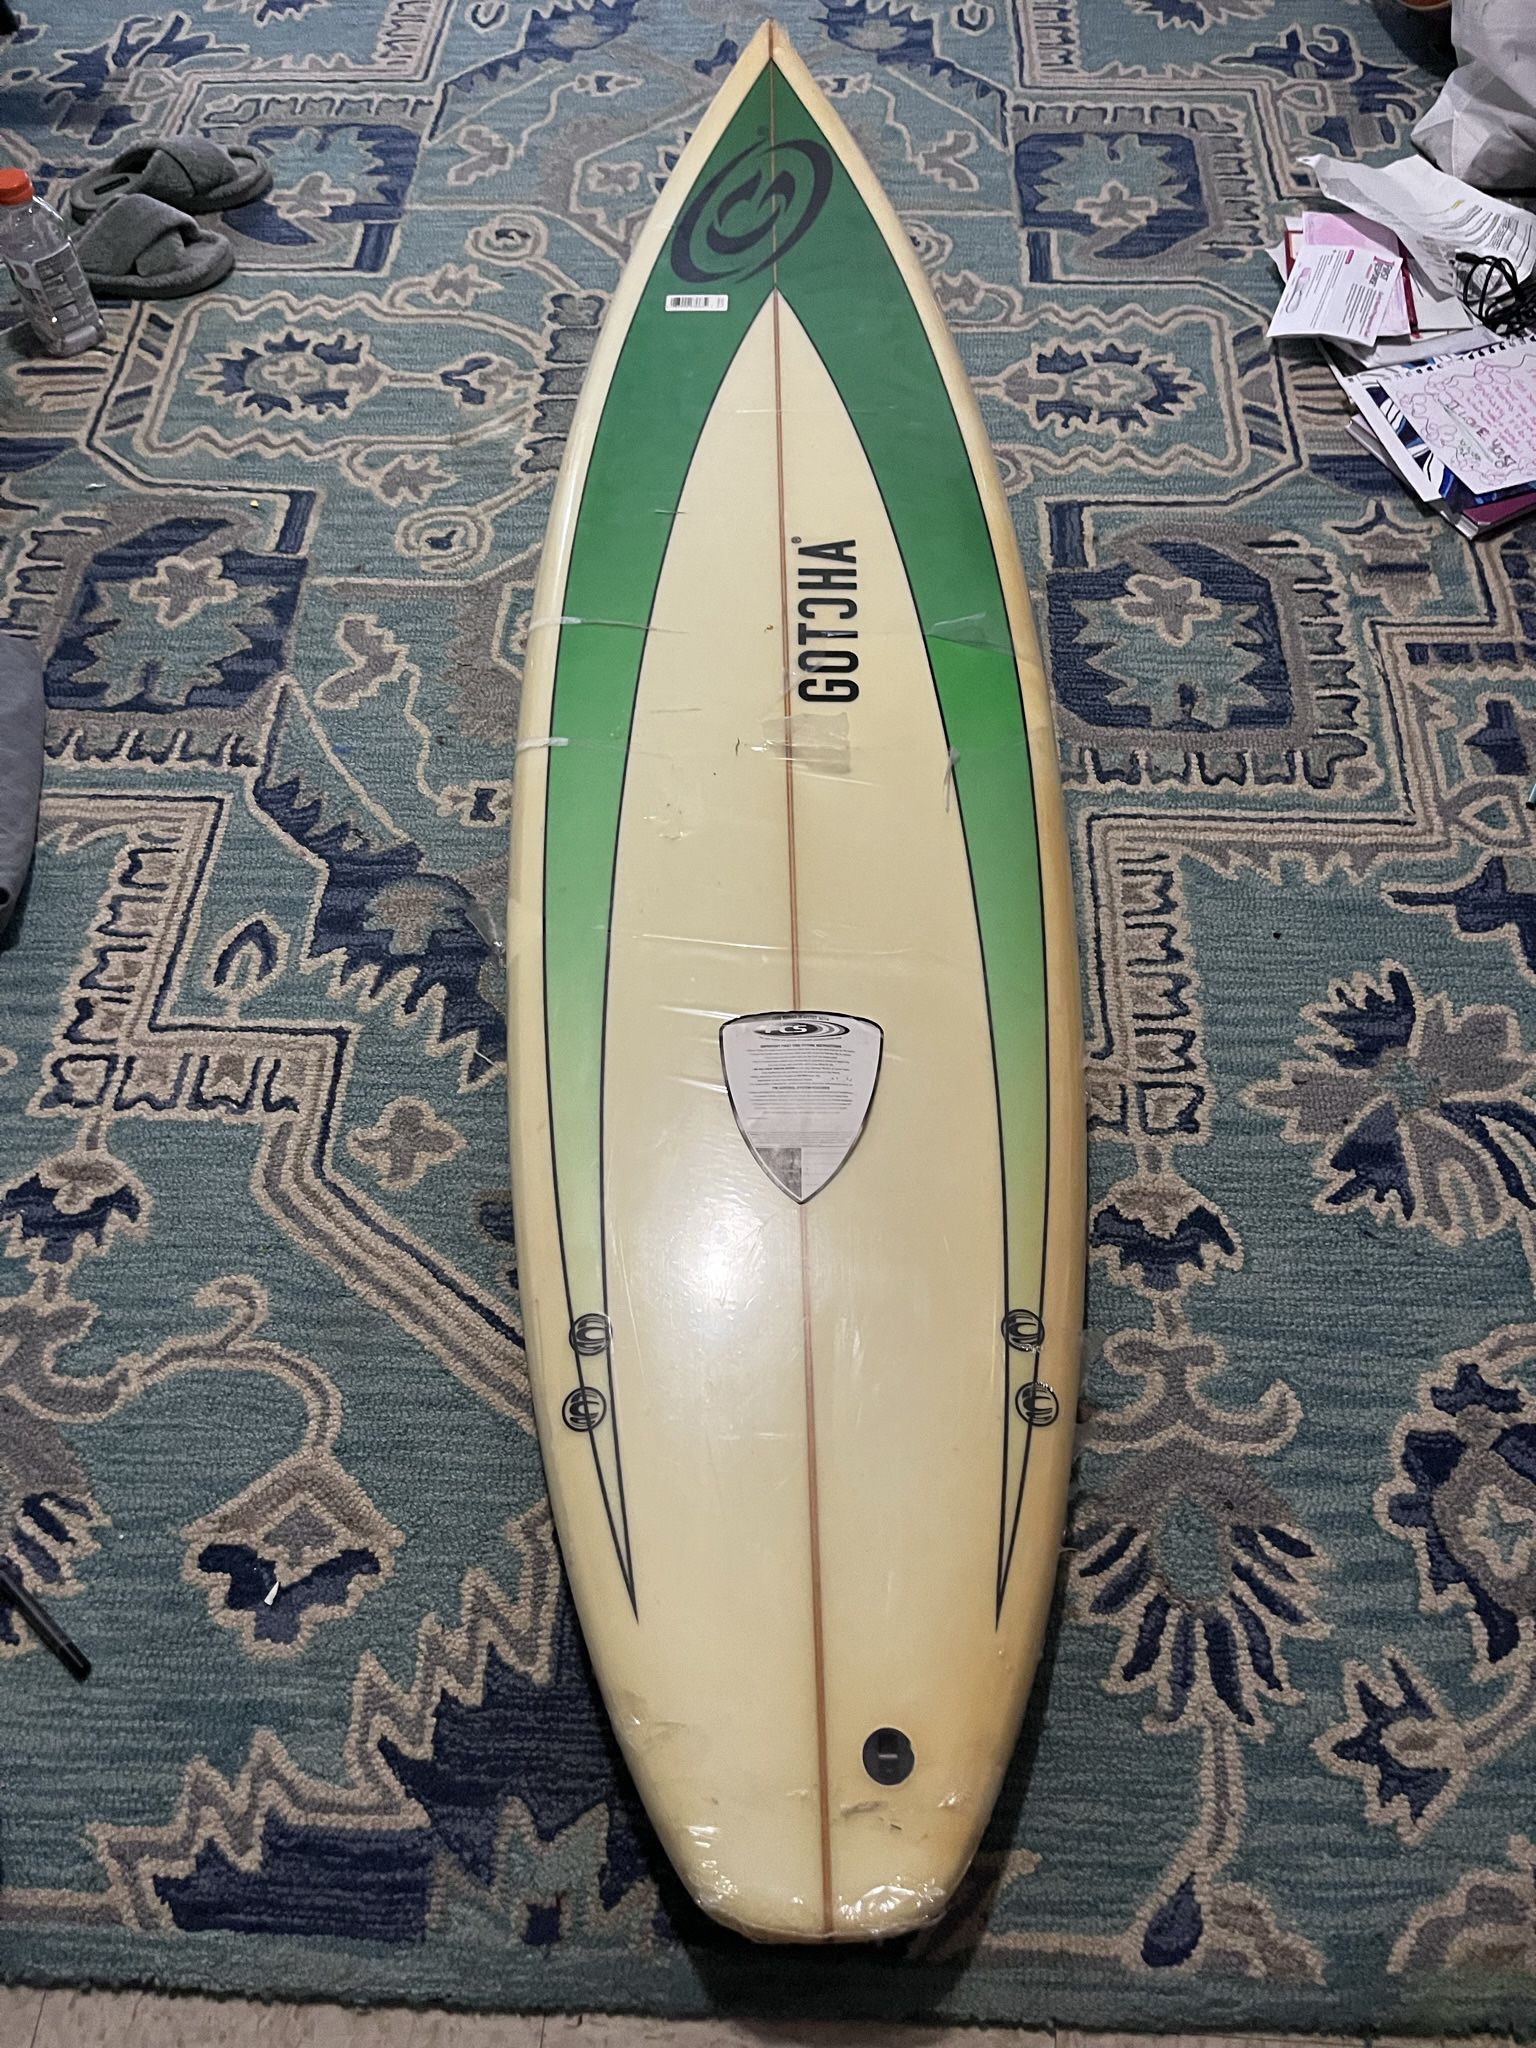 Vintage New in plastic Gotcha Team surfboard board is still new never set up make offer taking best offer